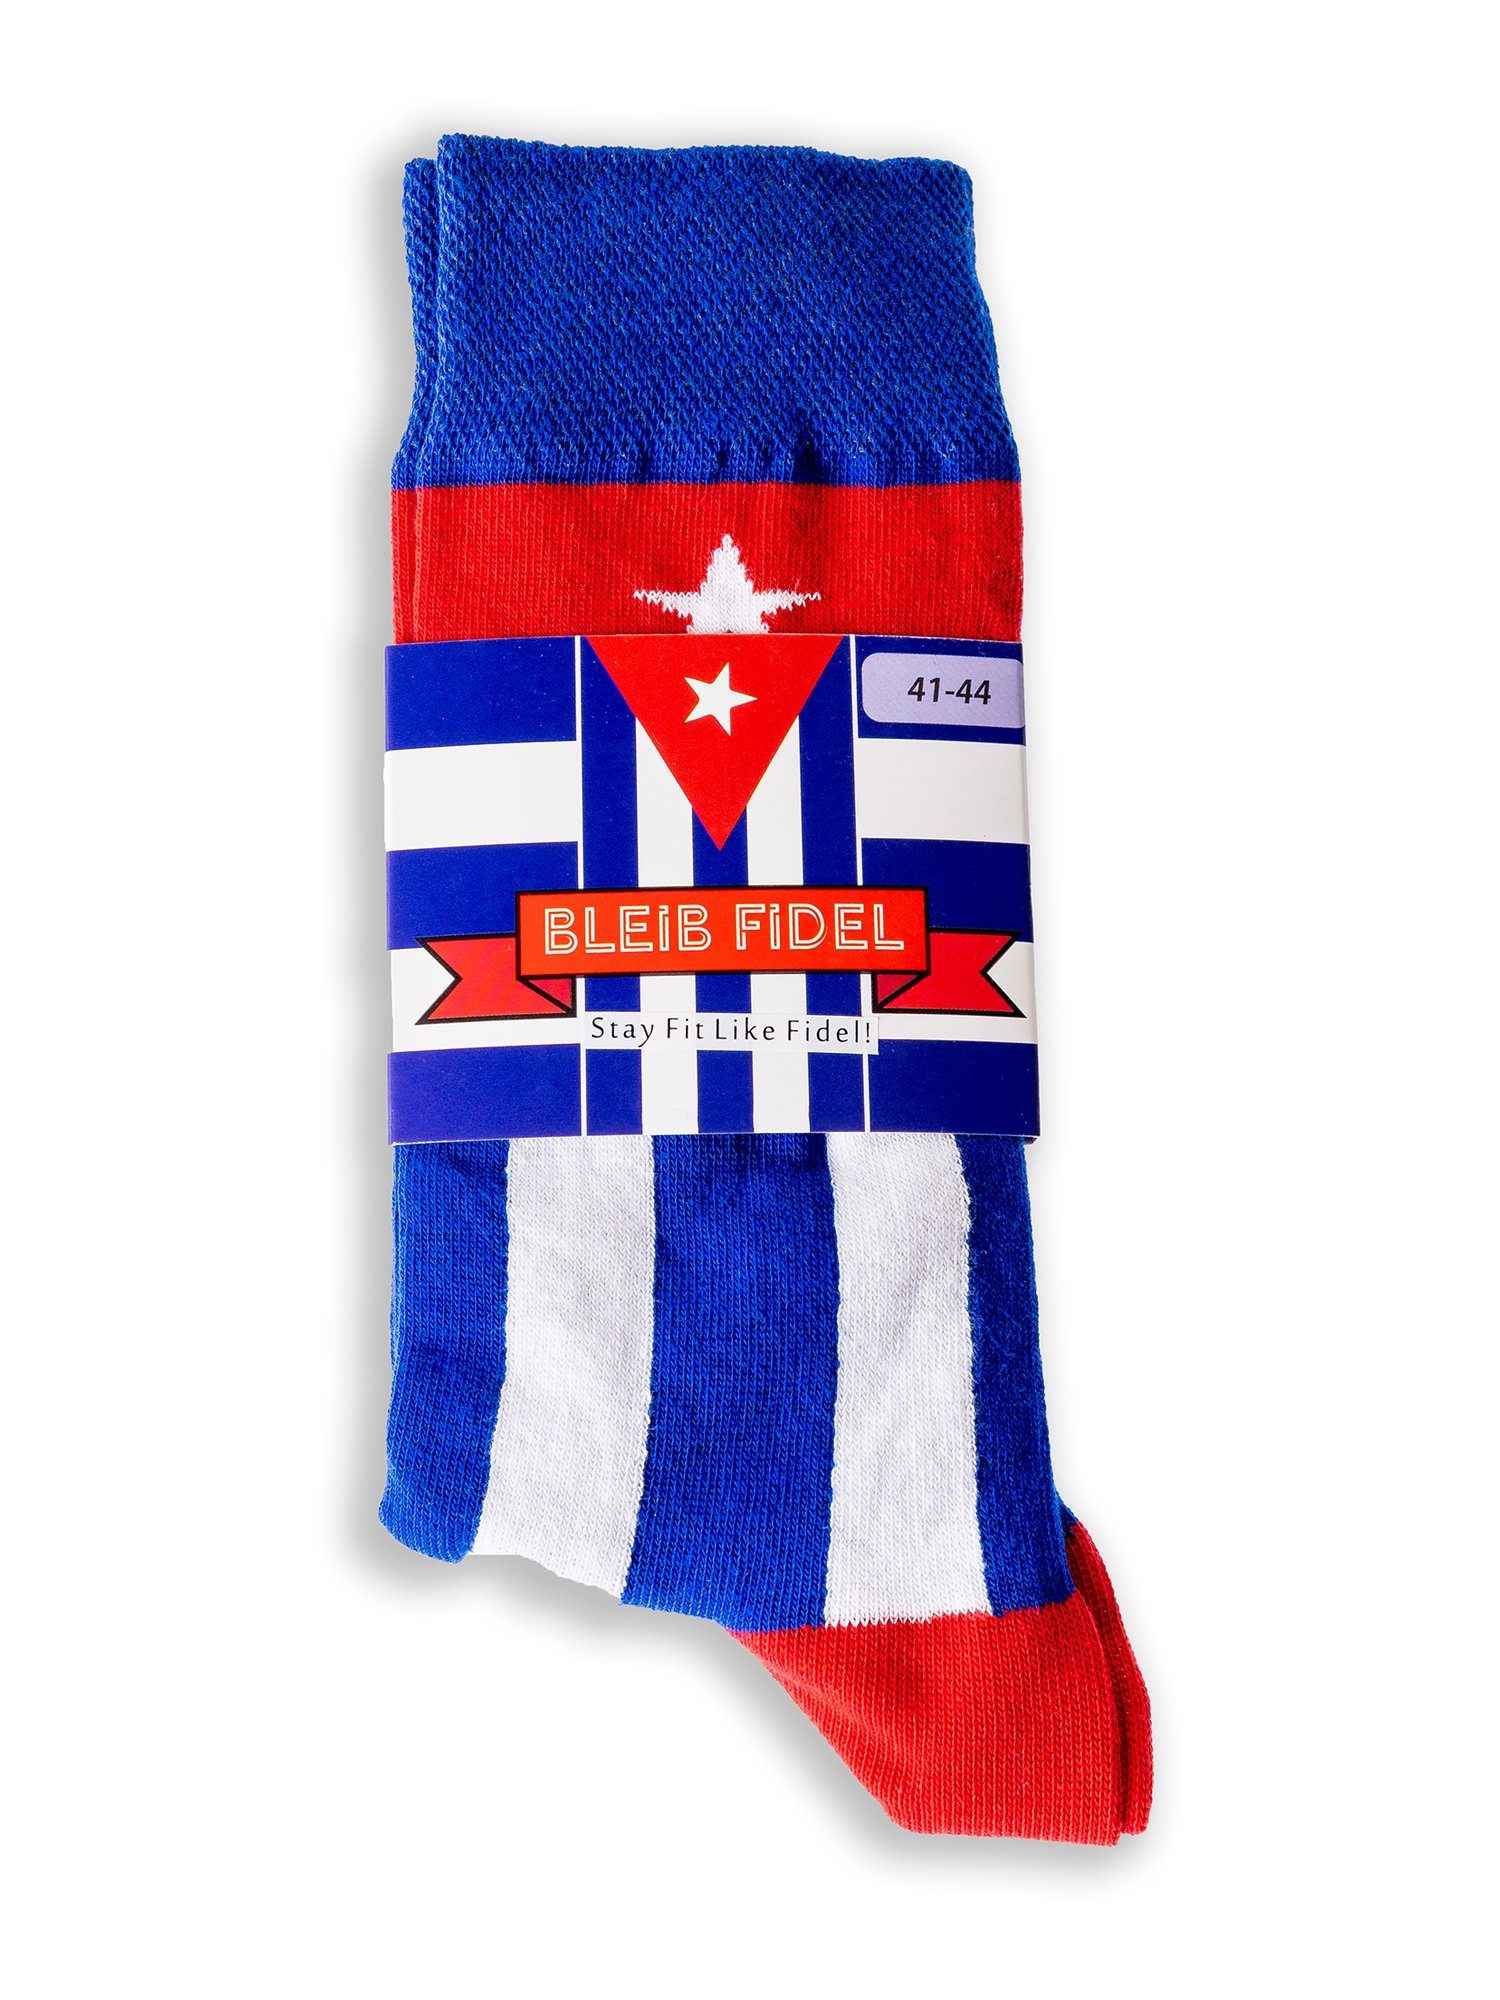 Leisure Lifestyle Fidel Freizeitsocken Banderole Socks Chili